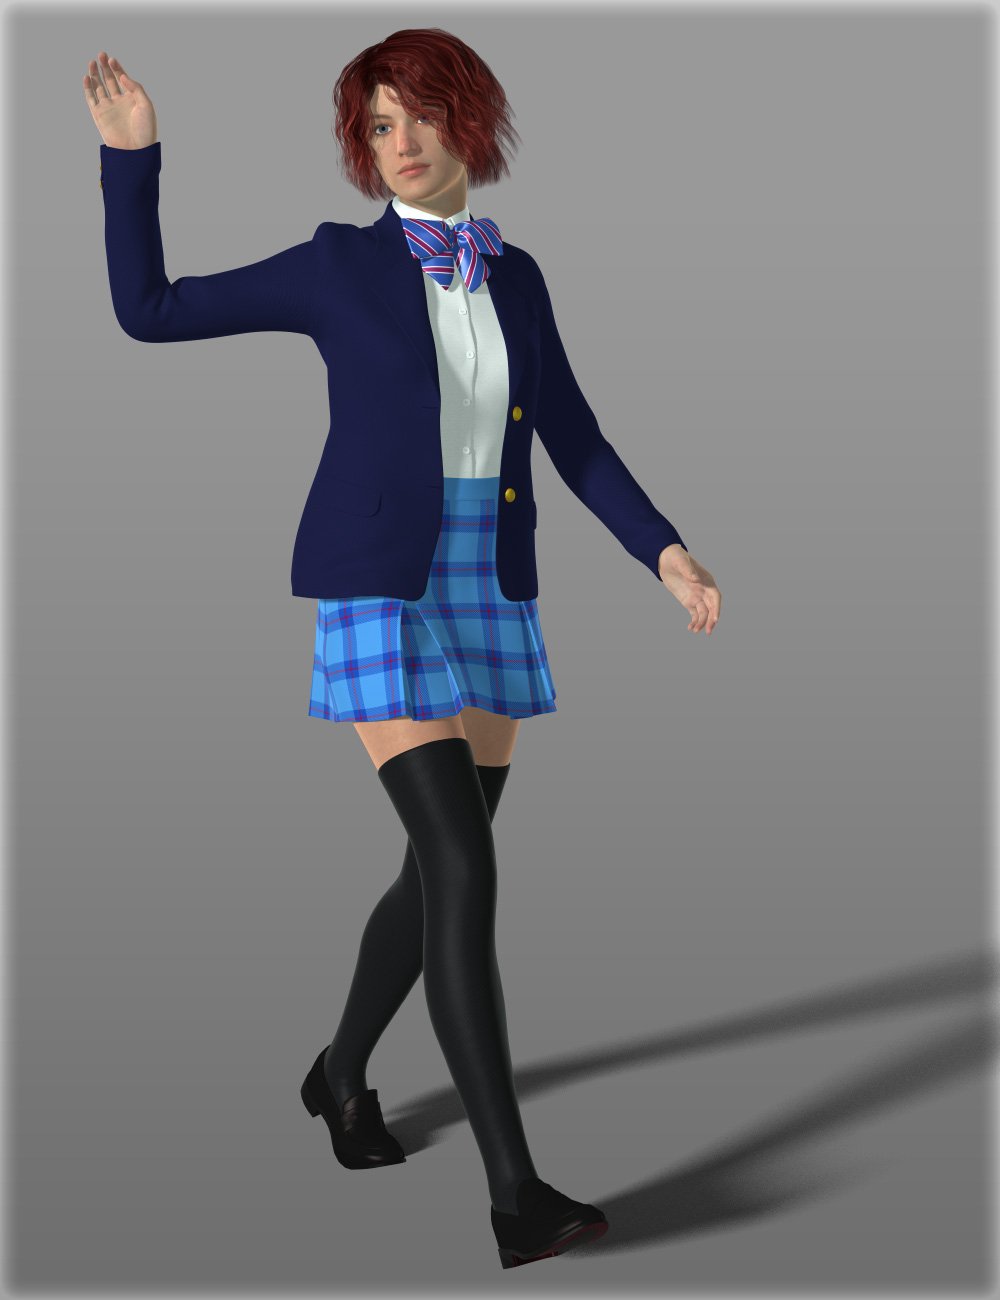 School Uniforms for Genesis 2 Female(s) by: IH Kang, 3D Models by Daz 3D